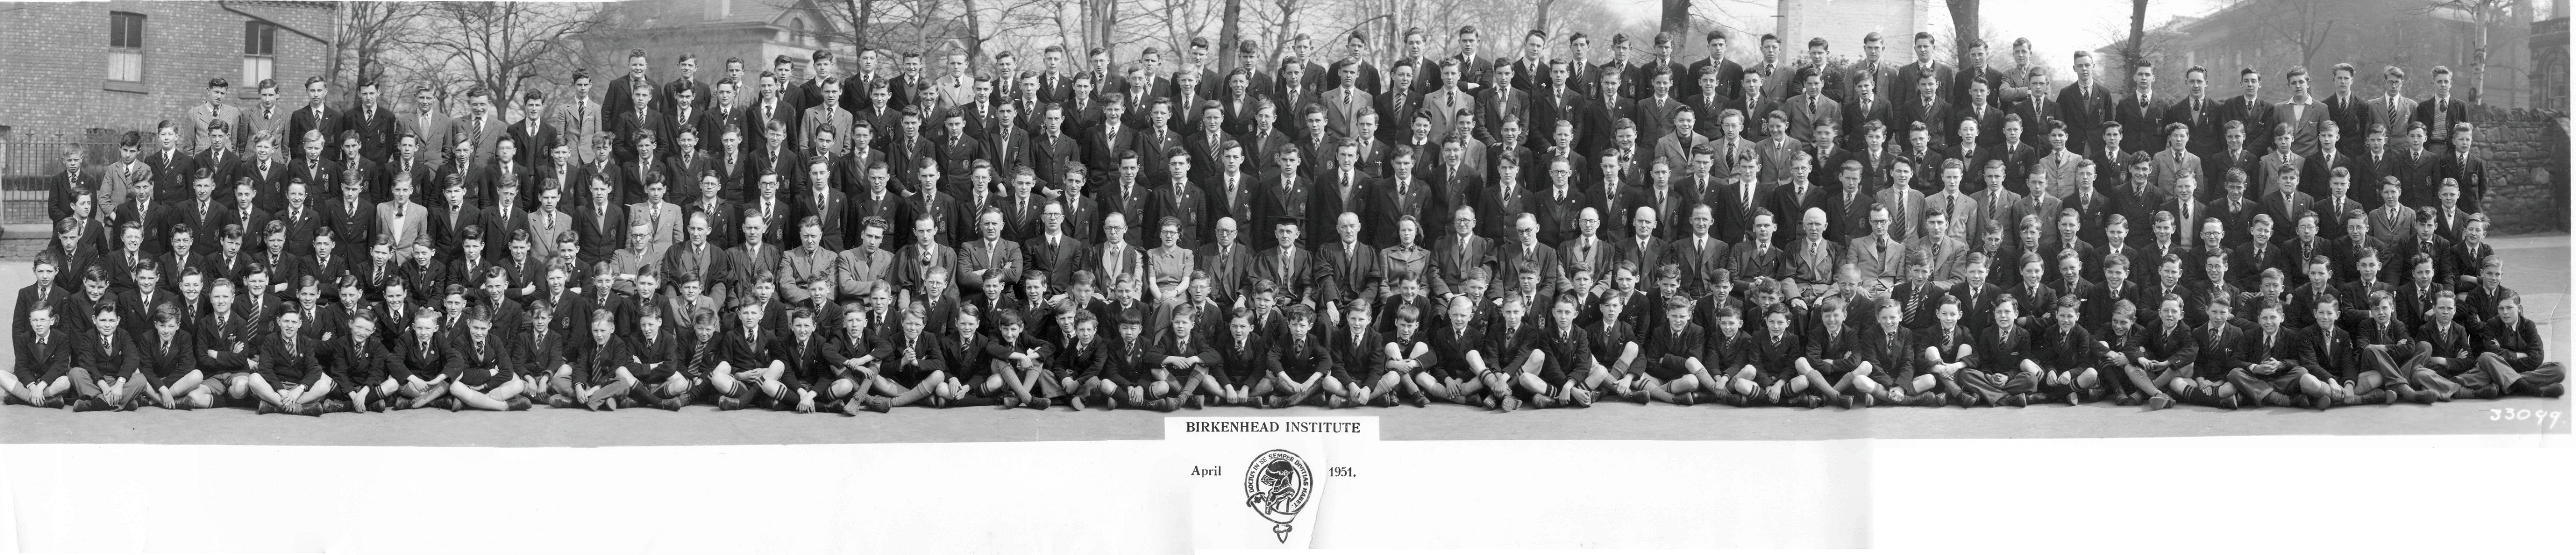 Whole School Photograph 1951